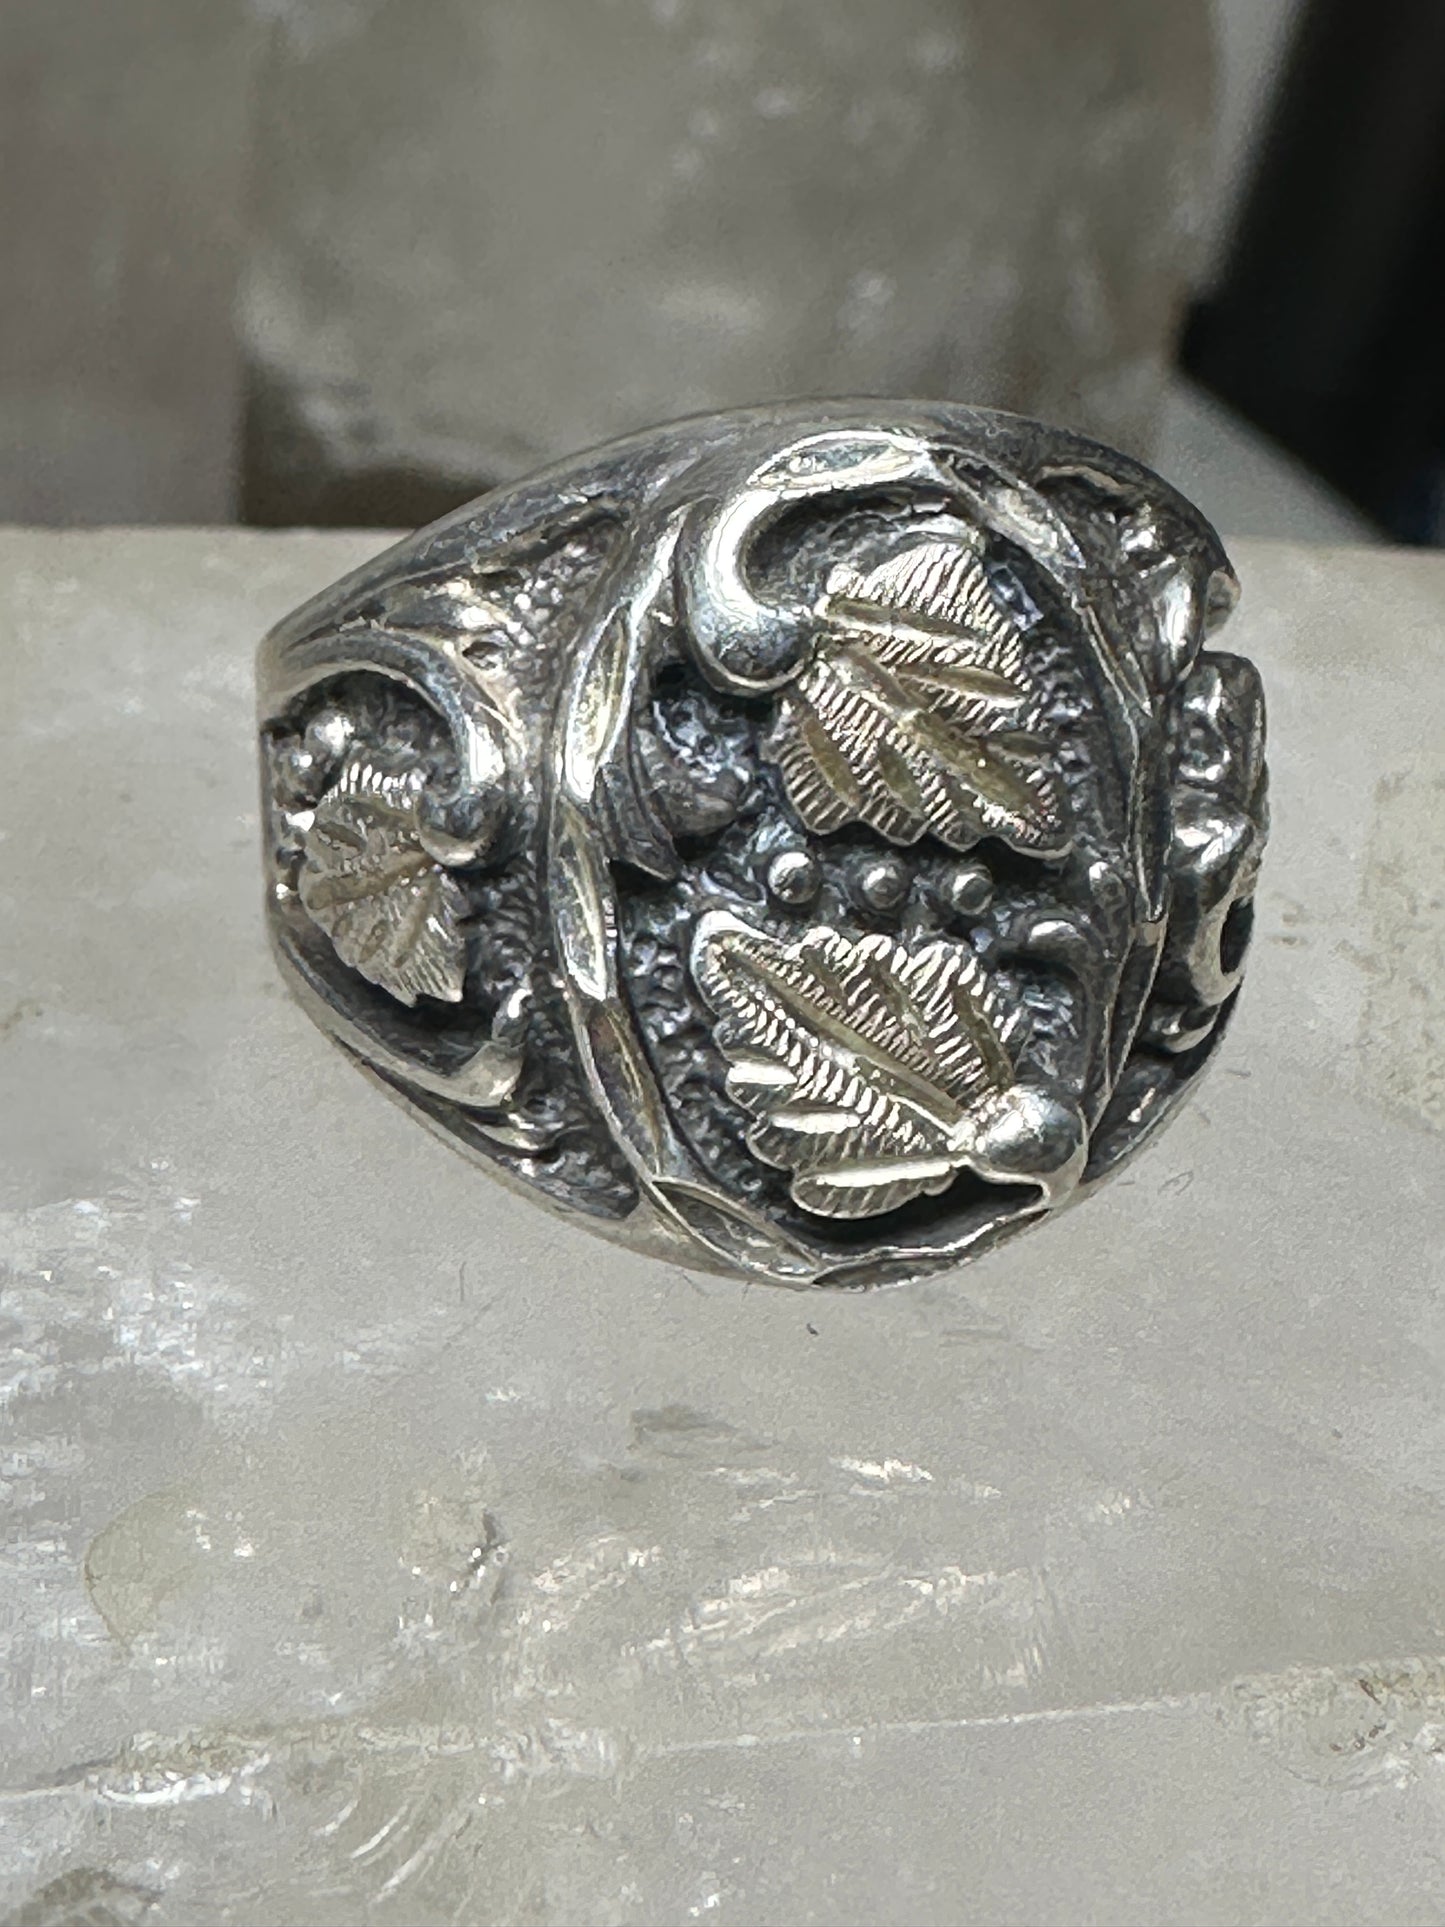 Black Hills Gold ring leaves  size 9.25 sterling silver men women